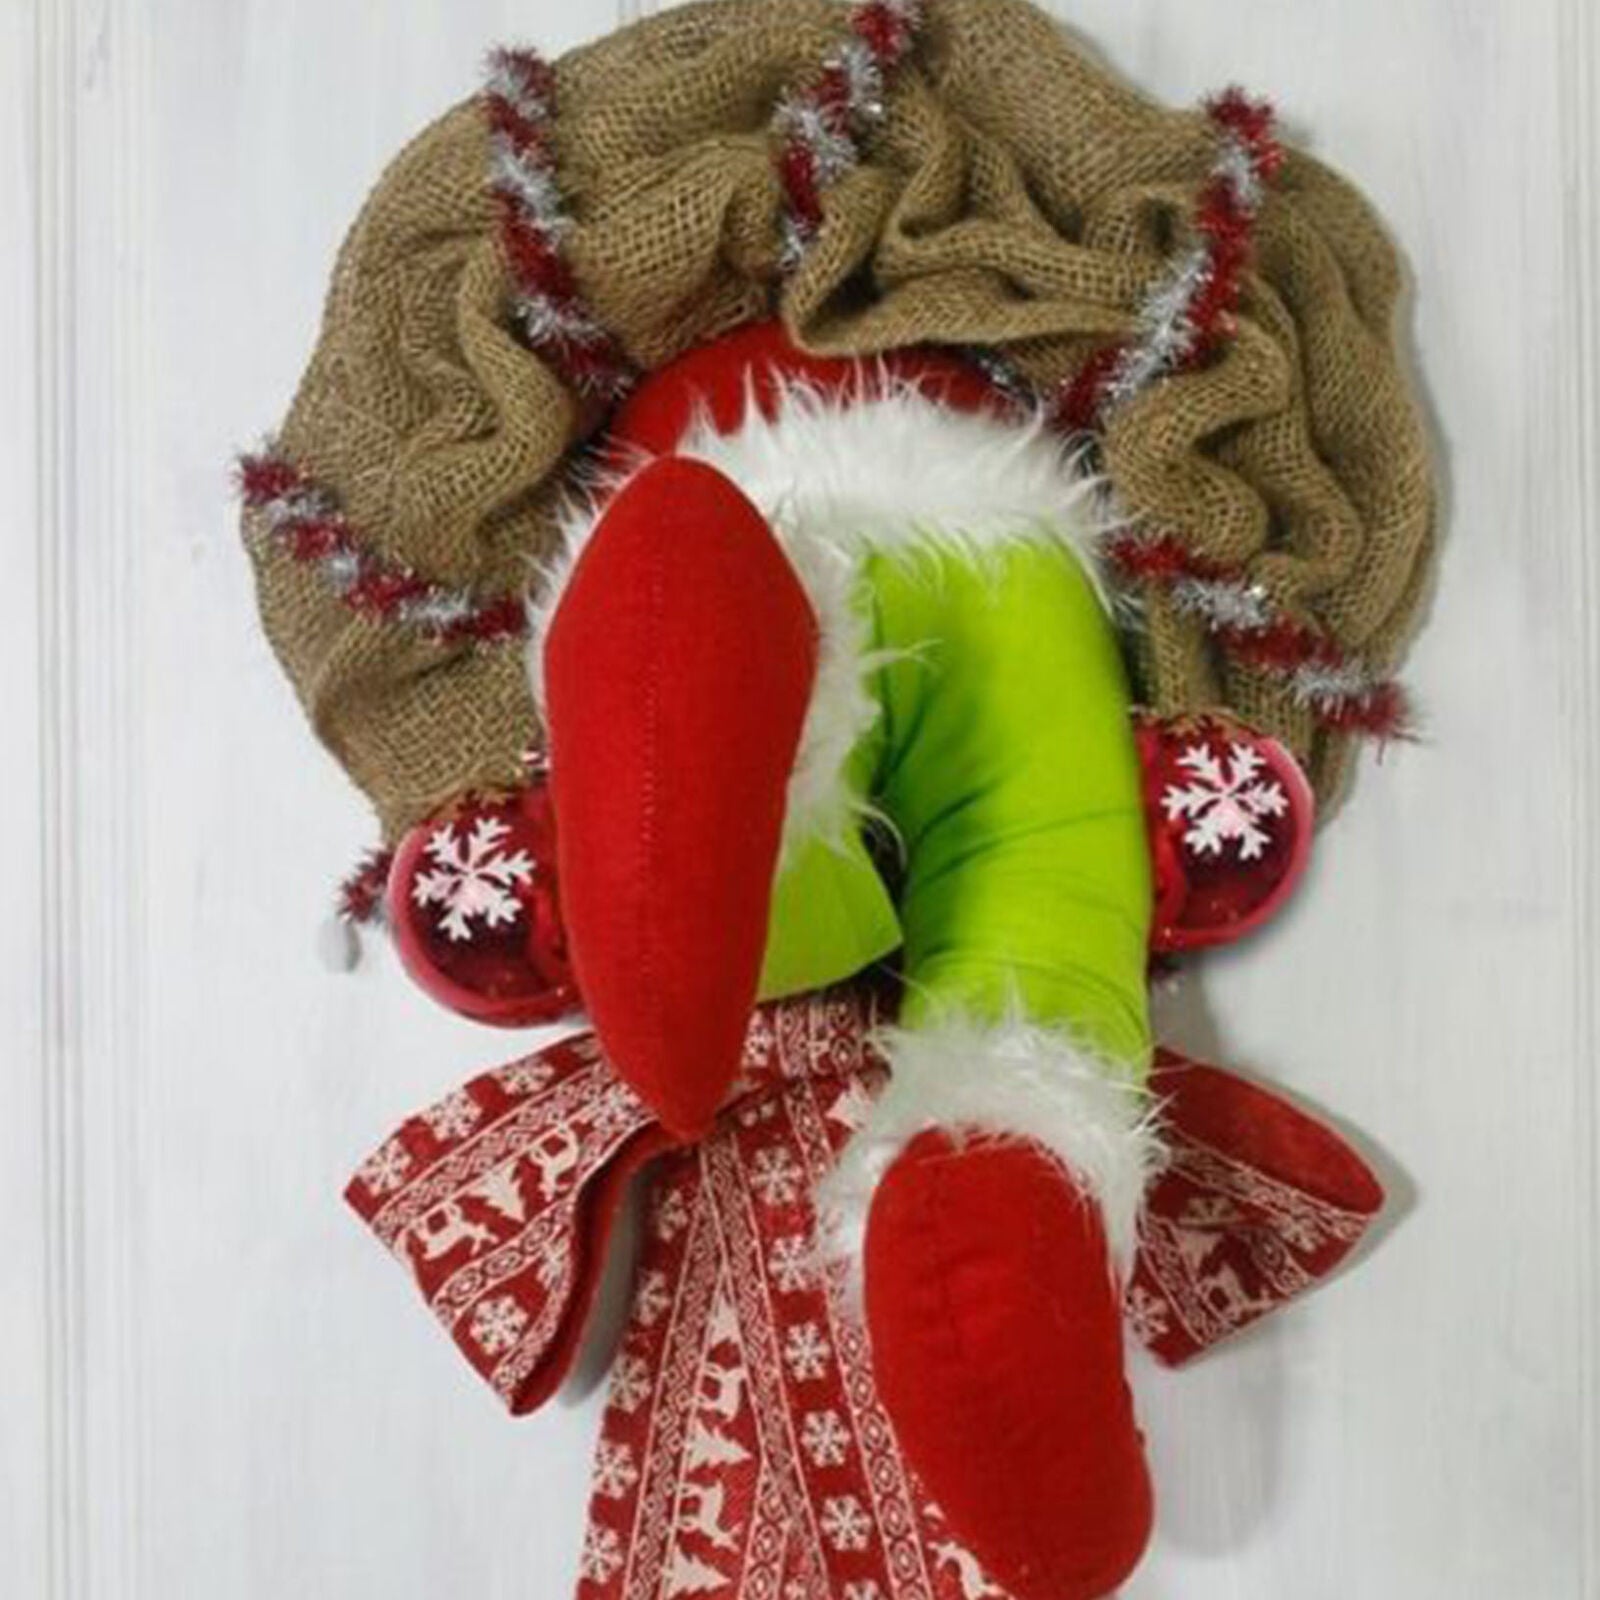 funny Christmas Burlap Wreath The Grinch Stole Christmas Garland Door Decor gift